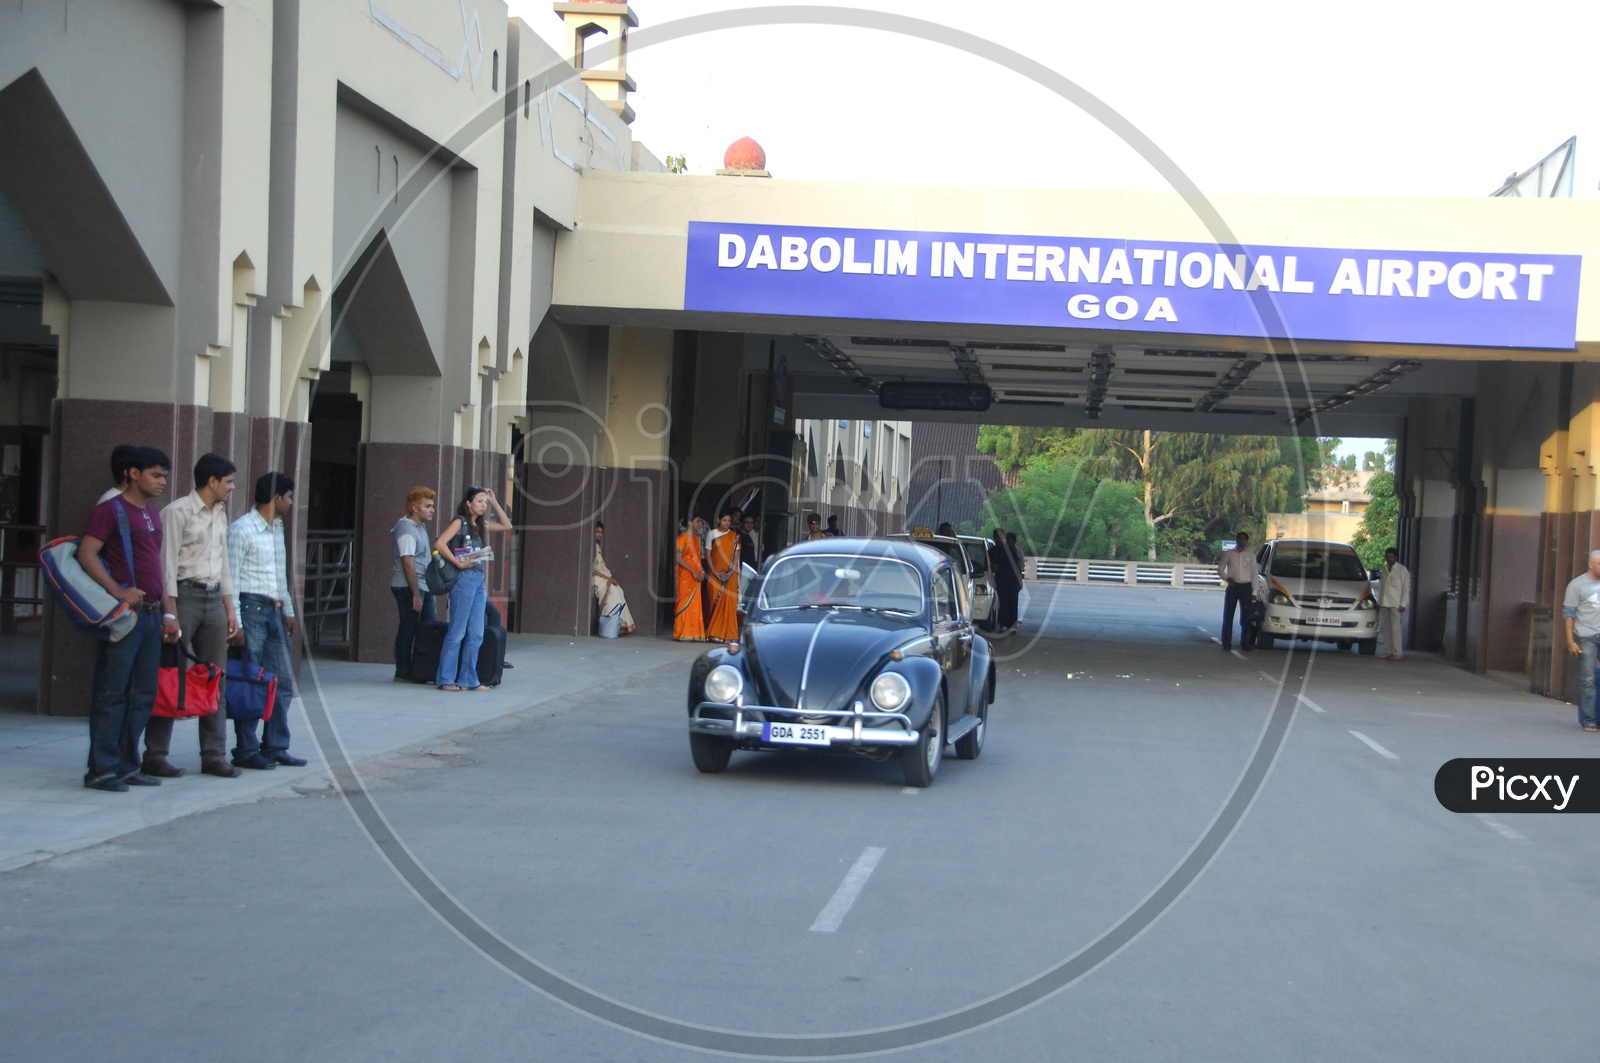 Movie set of Dabolim International Airport GOA